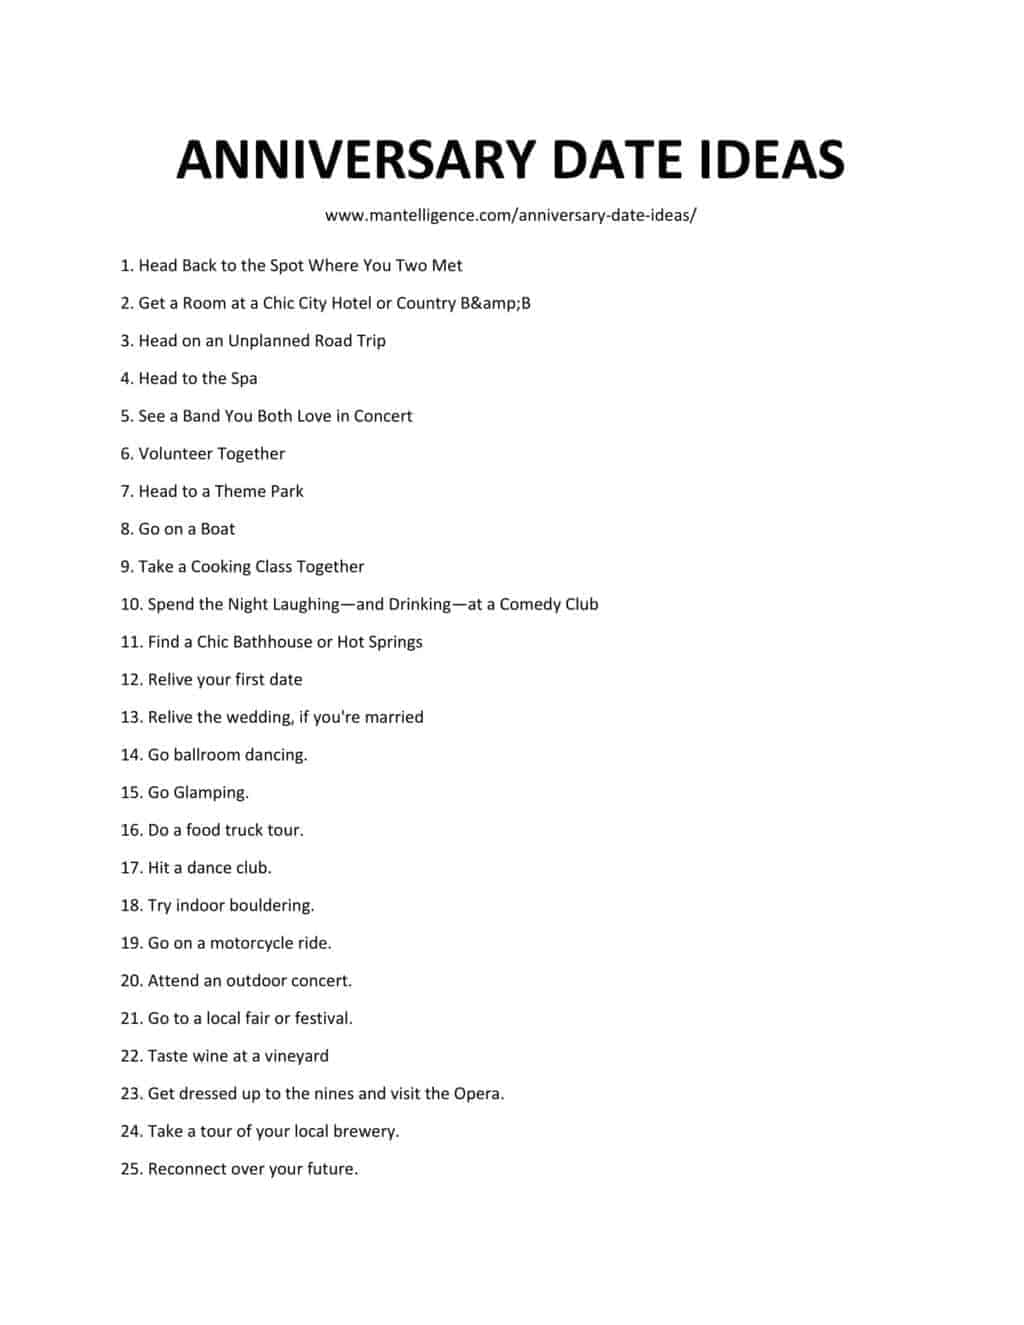 122 Ideas para citas de aniversario: anima tu relación.